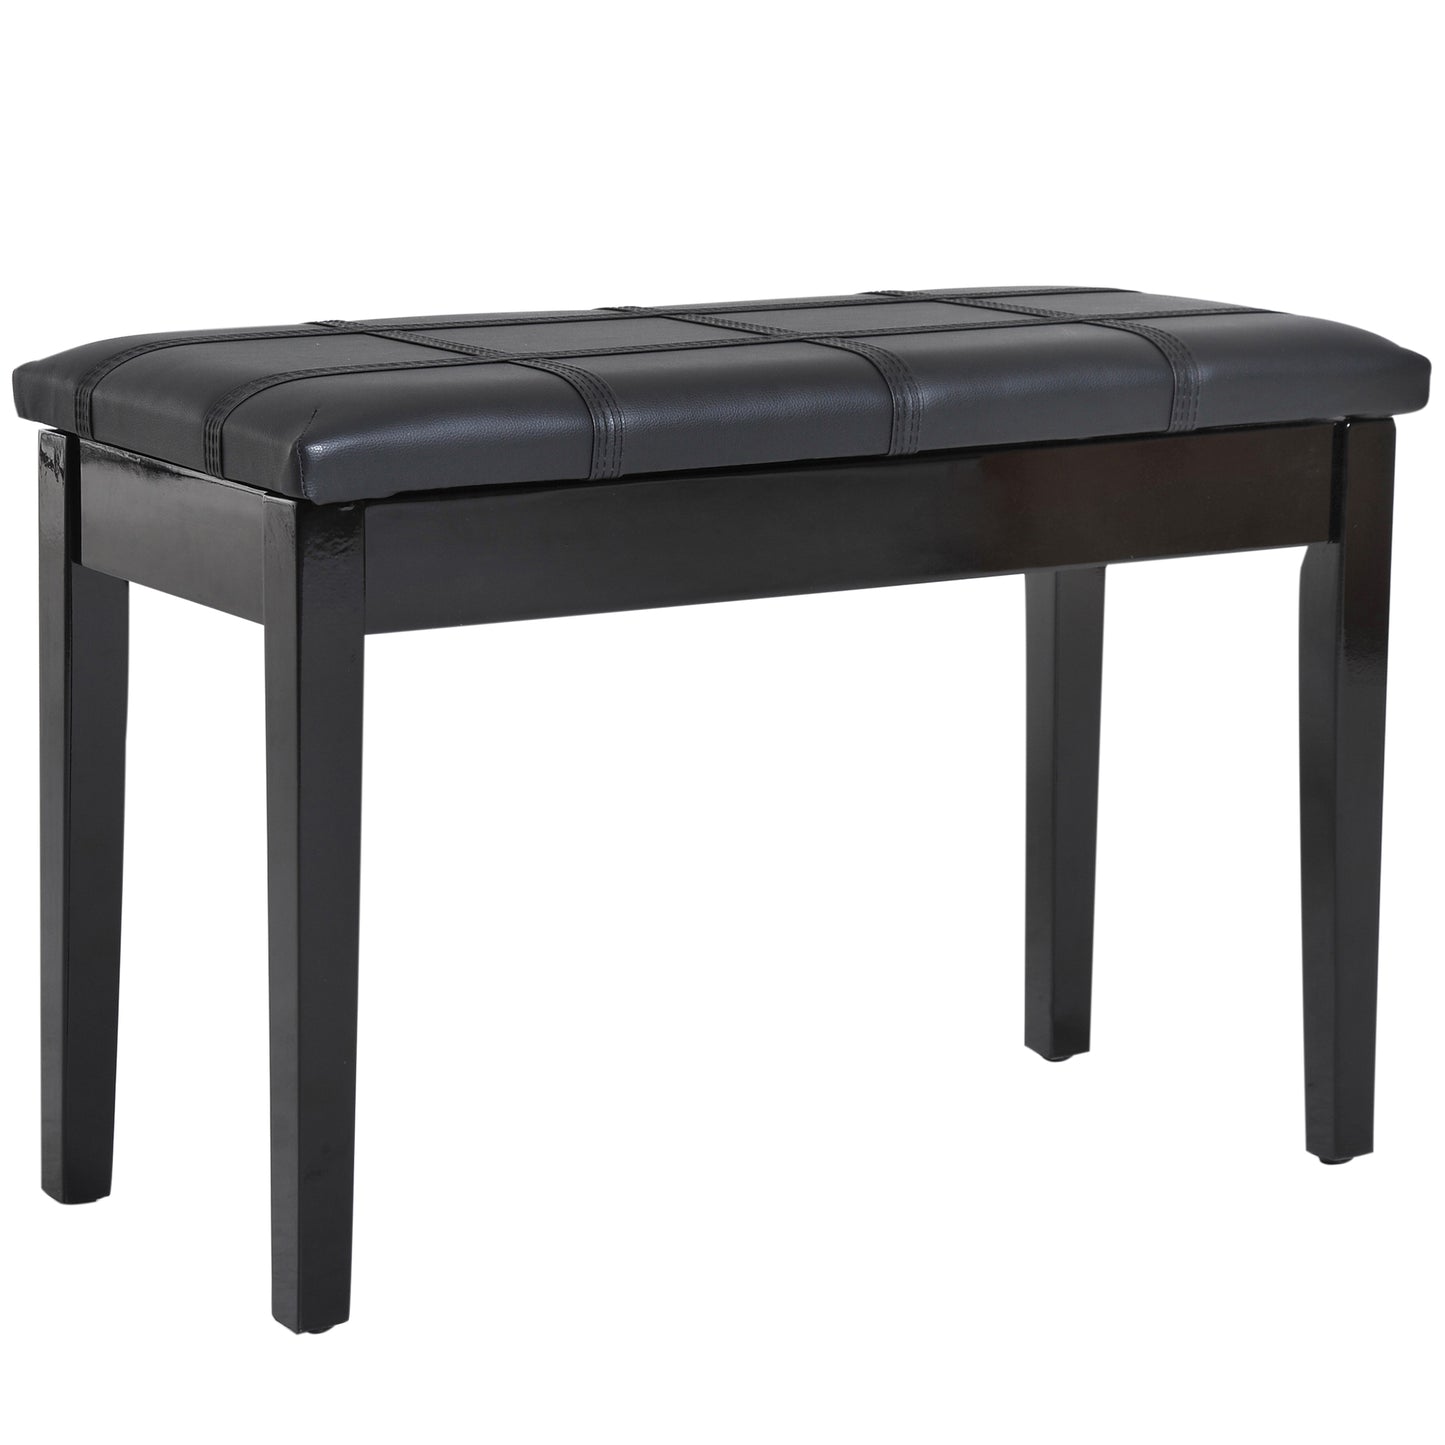 HOMCOM Piano Bench, PU Leather, 75Lx35Wx49H cm-Black